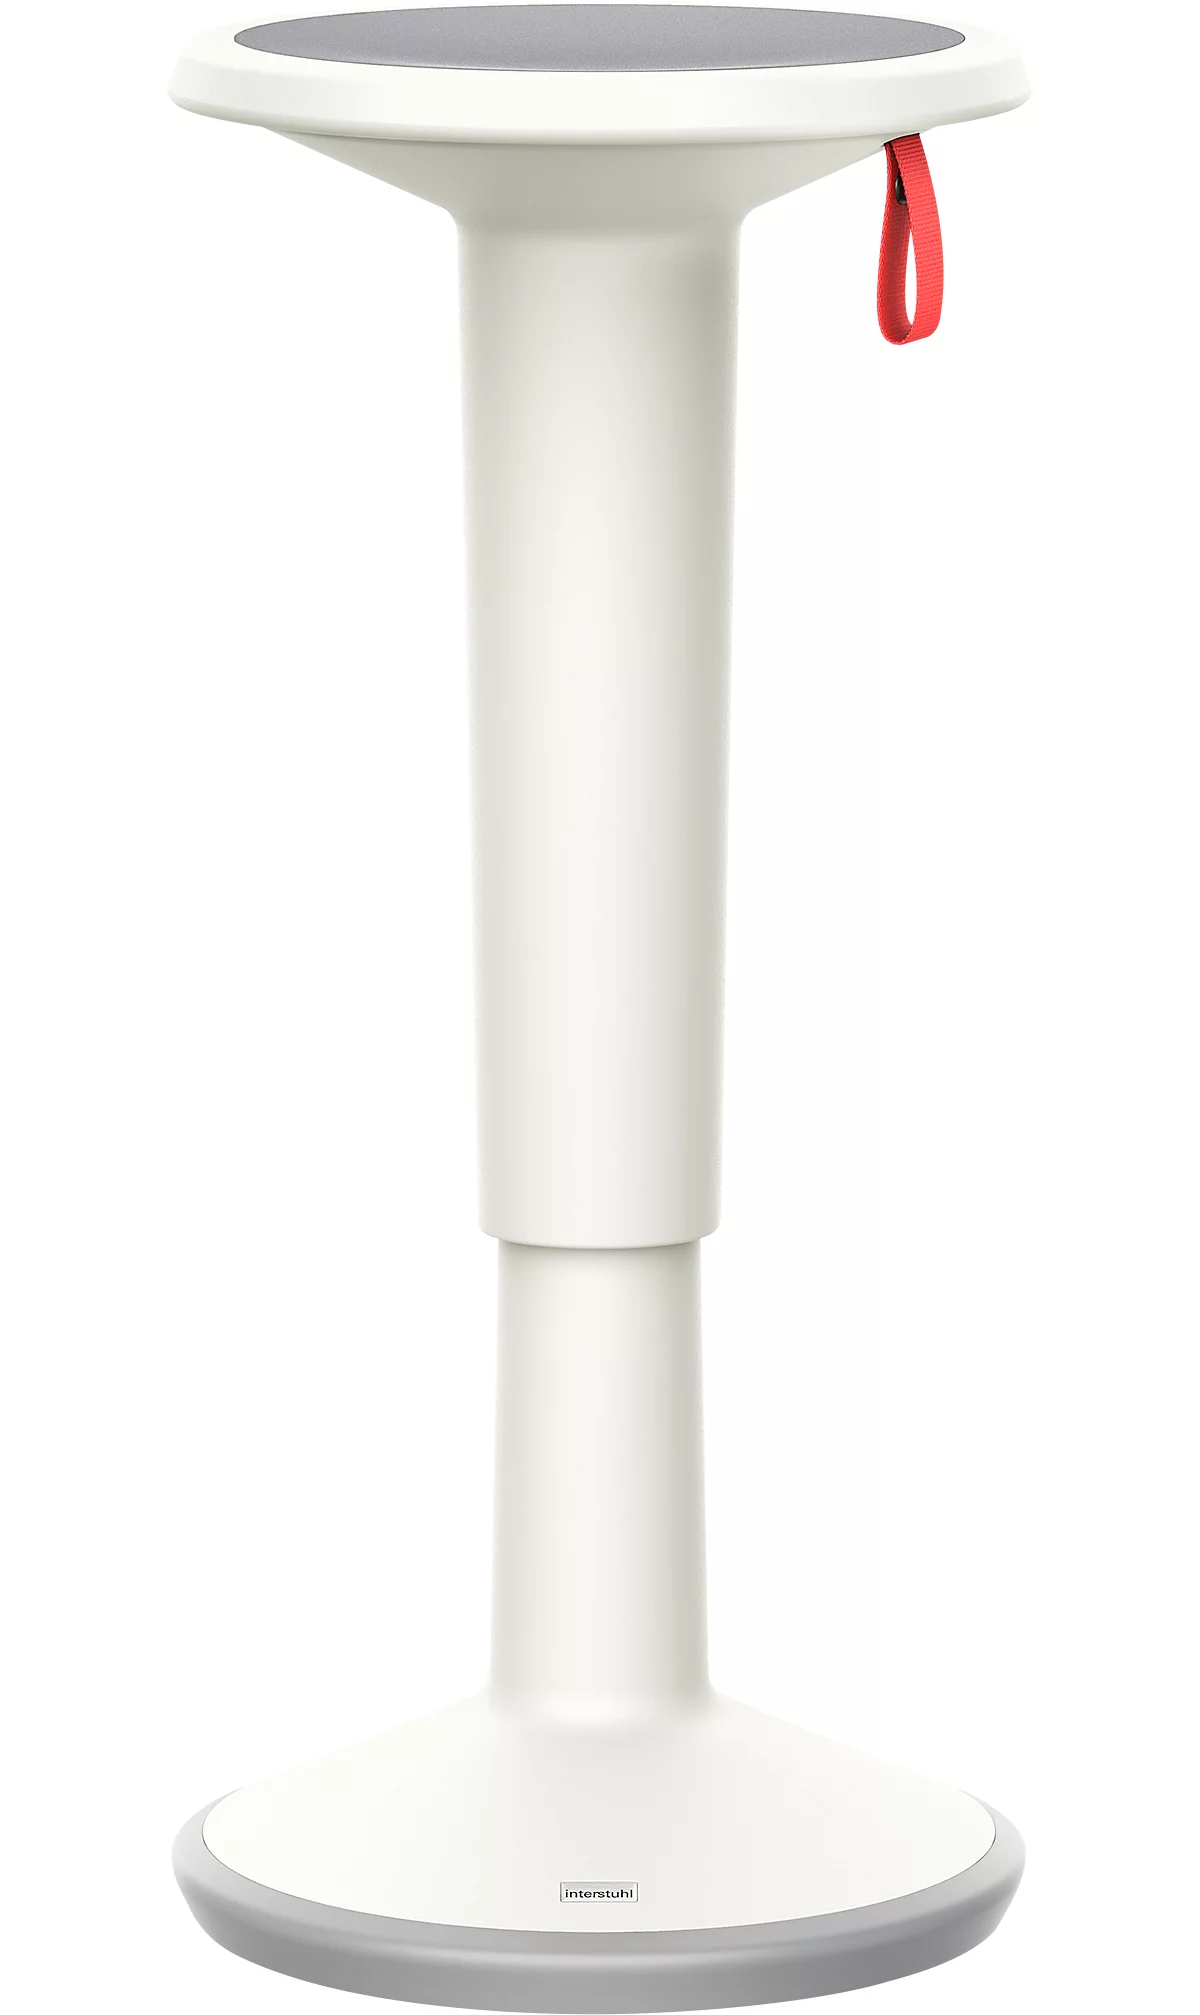 Taburete StandUP regulable en altura, Ø 330 x H 590 - 845 mm, gris-blanco